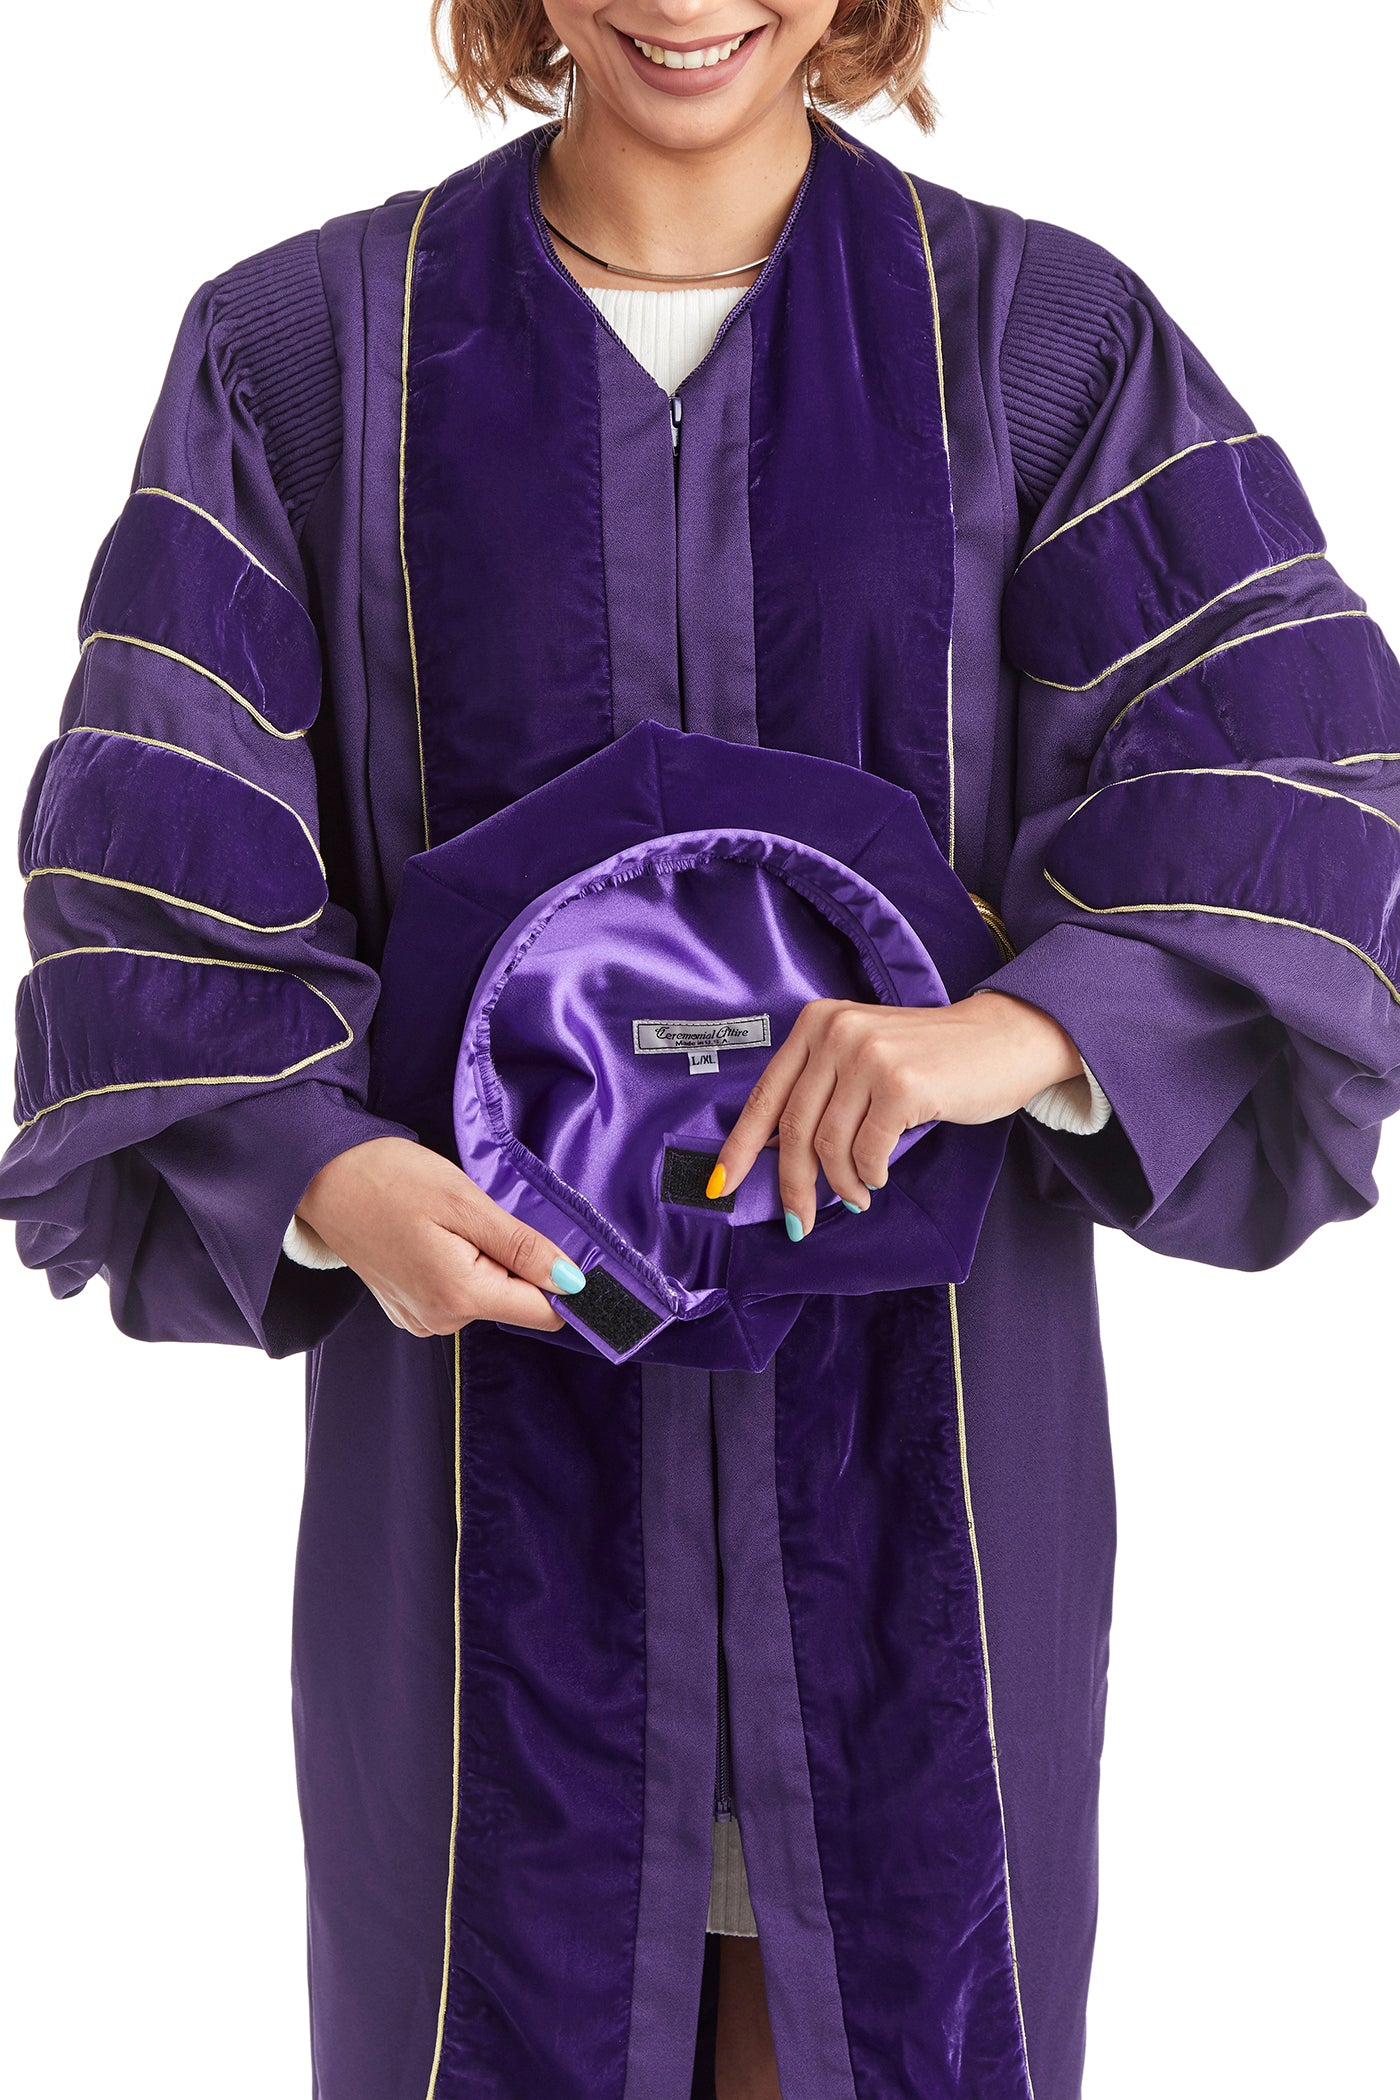 University of Washington 8-Sided Purple Velvet Doctoral Tam (Cap) with Adjustable velcro